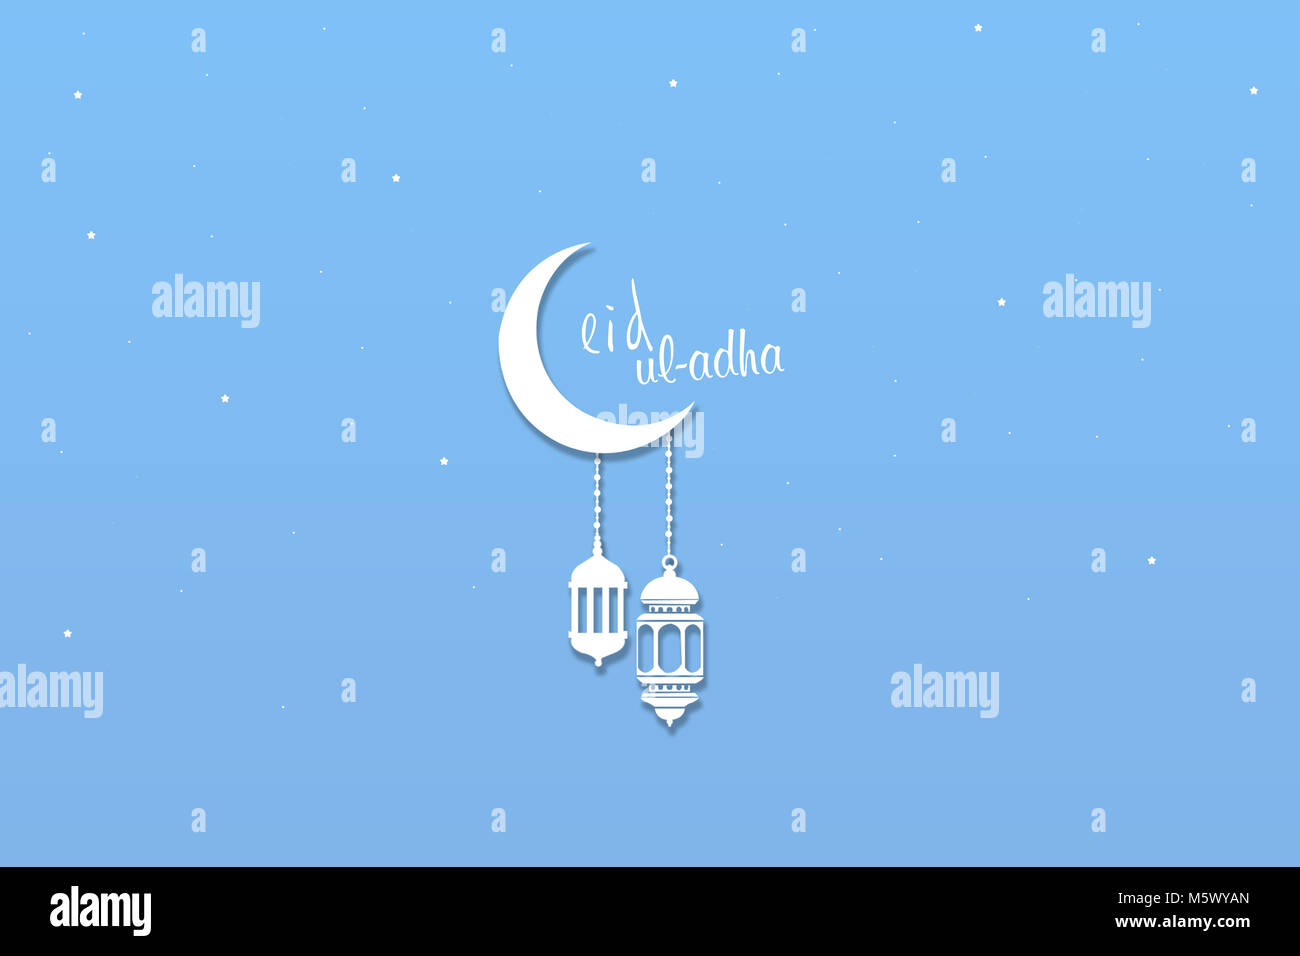 Eid-Ul-Adha on stars and moon background for Muslim community festival  celebrations Stock Photo - Alamy